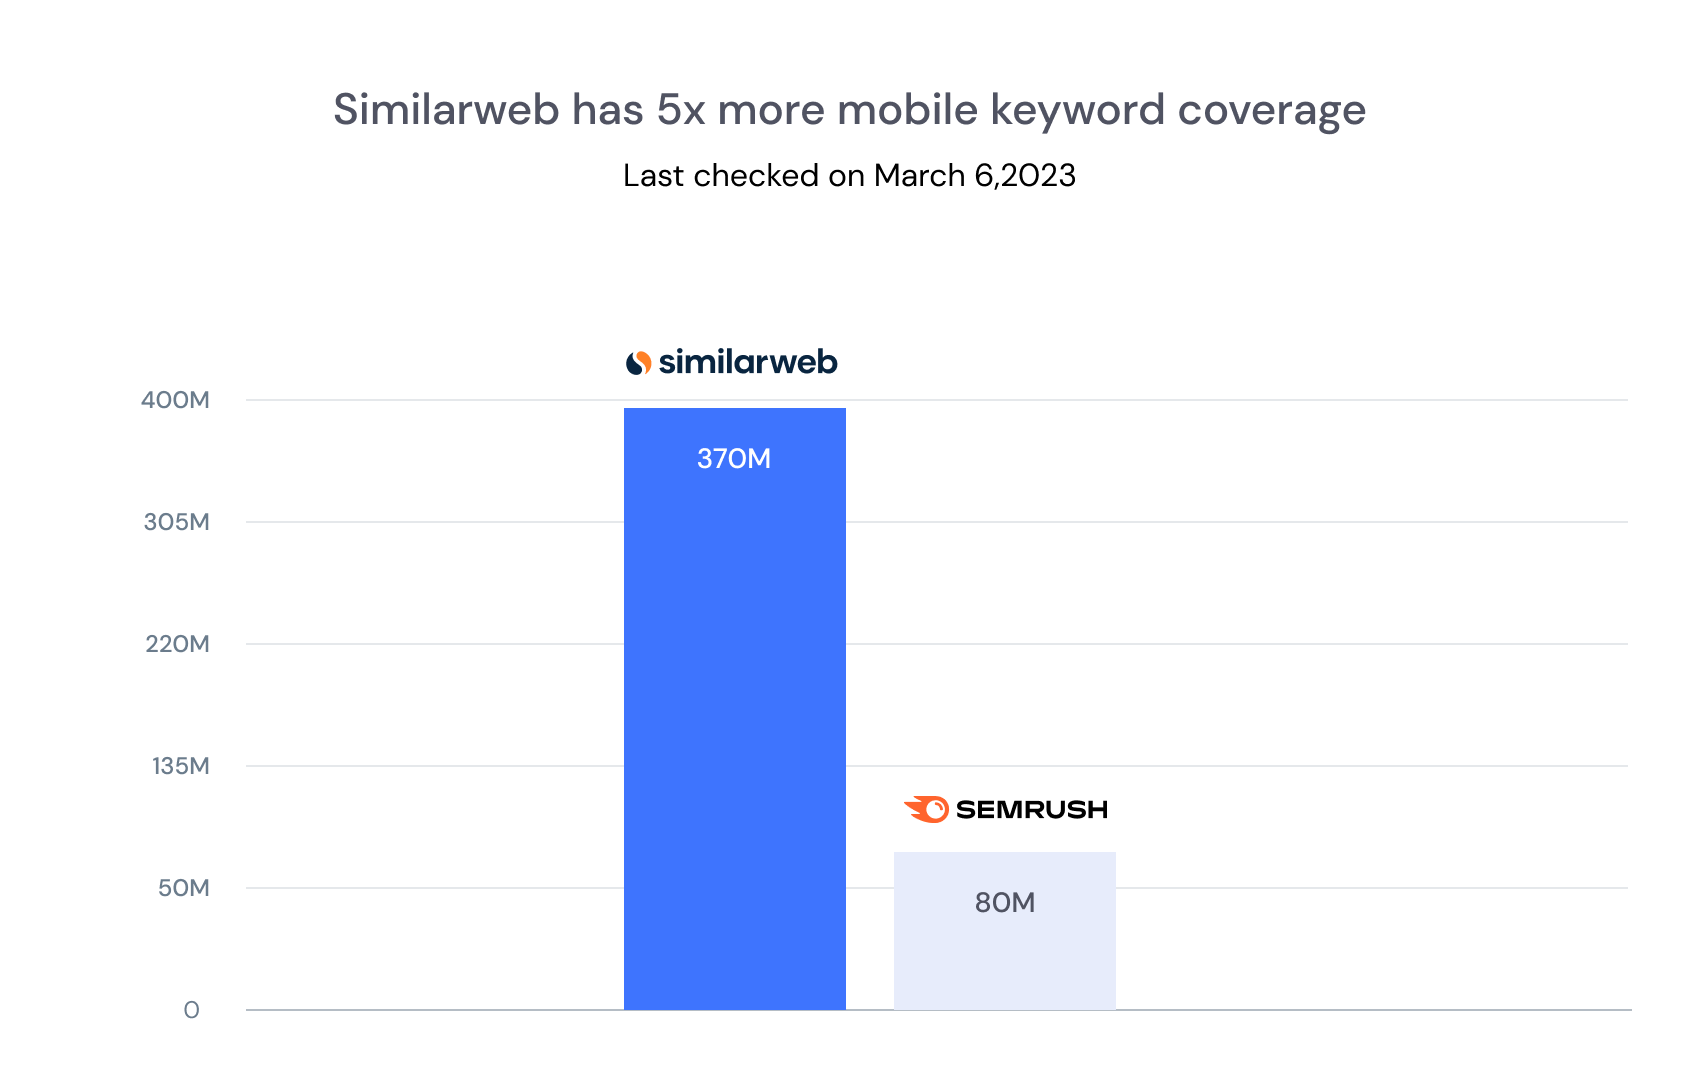 Similarweb has 5x more mobile keyword coverage